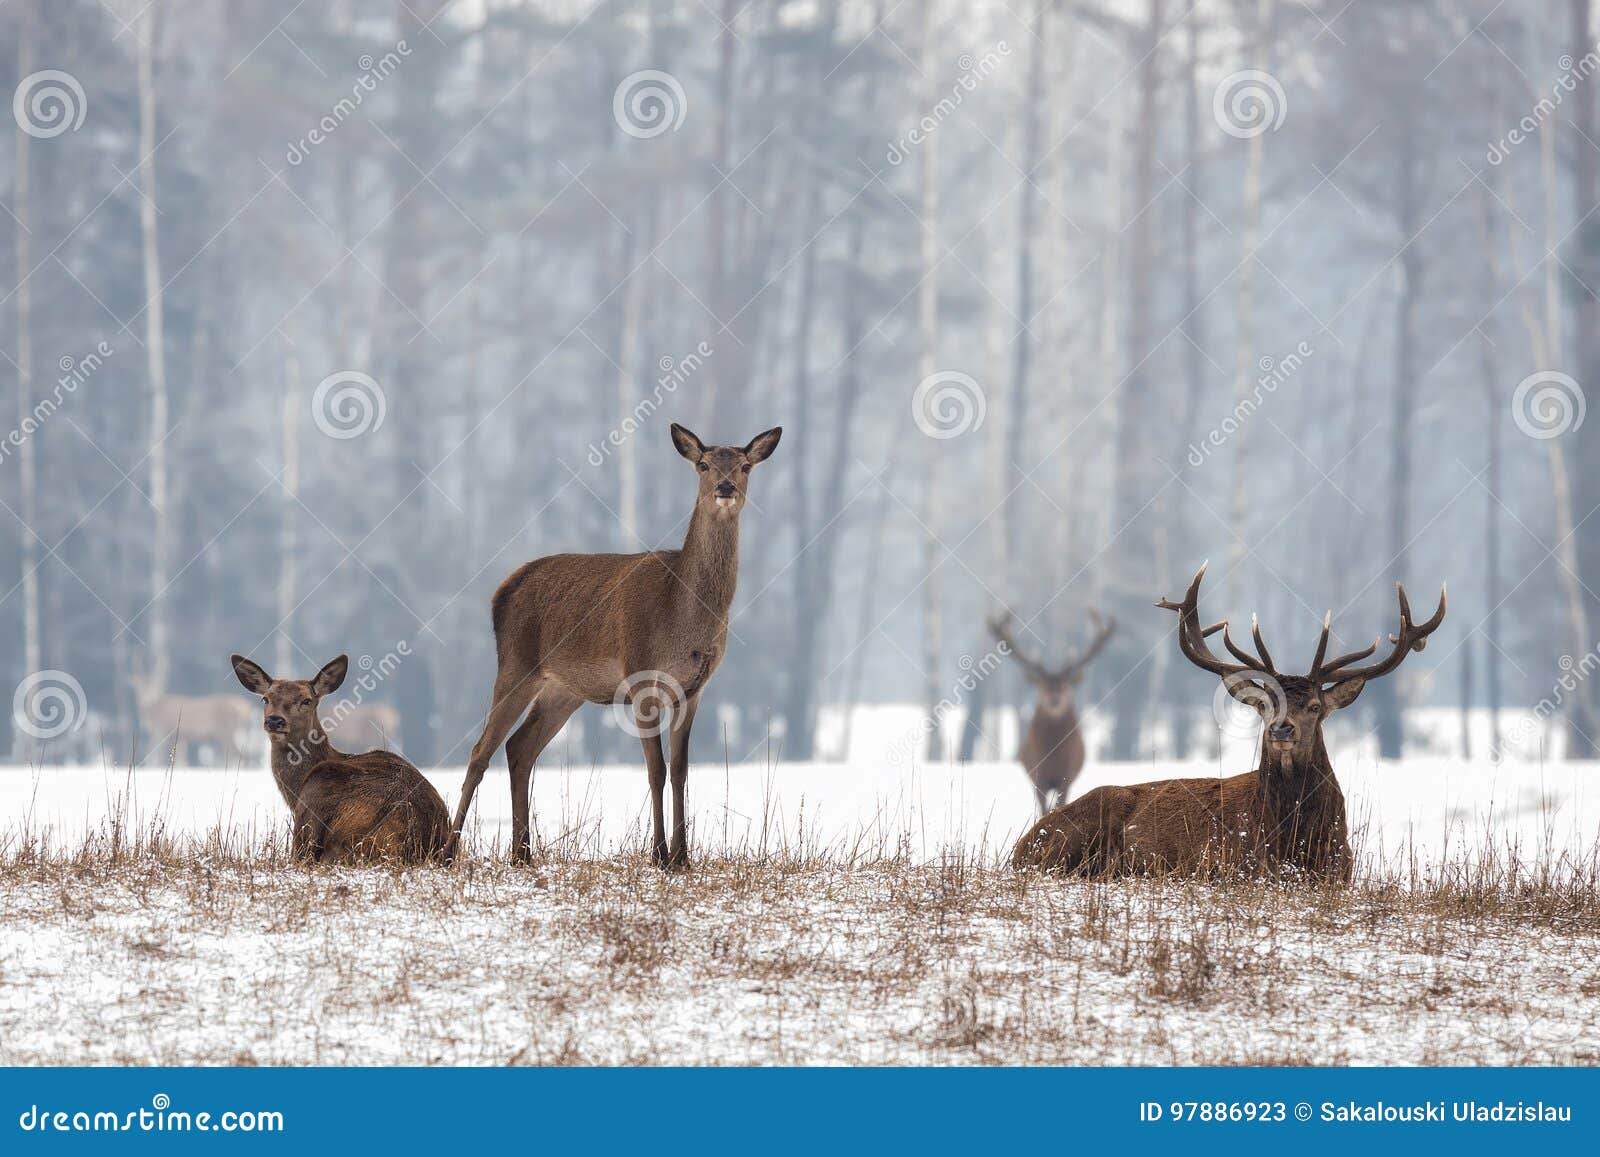 siesta.small herd of noble reindeer red deer,cervus elaphus,cervidae resting on a hillock at background of foggy winter forest